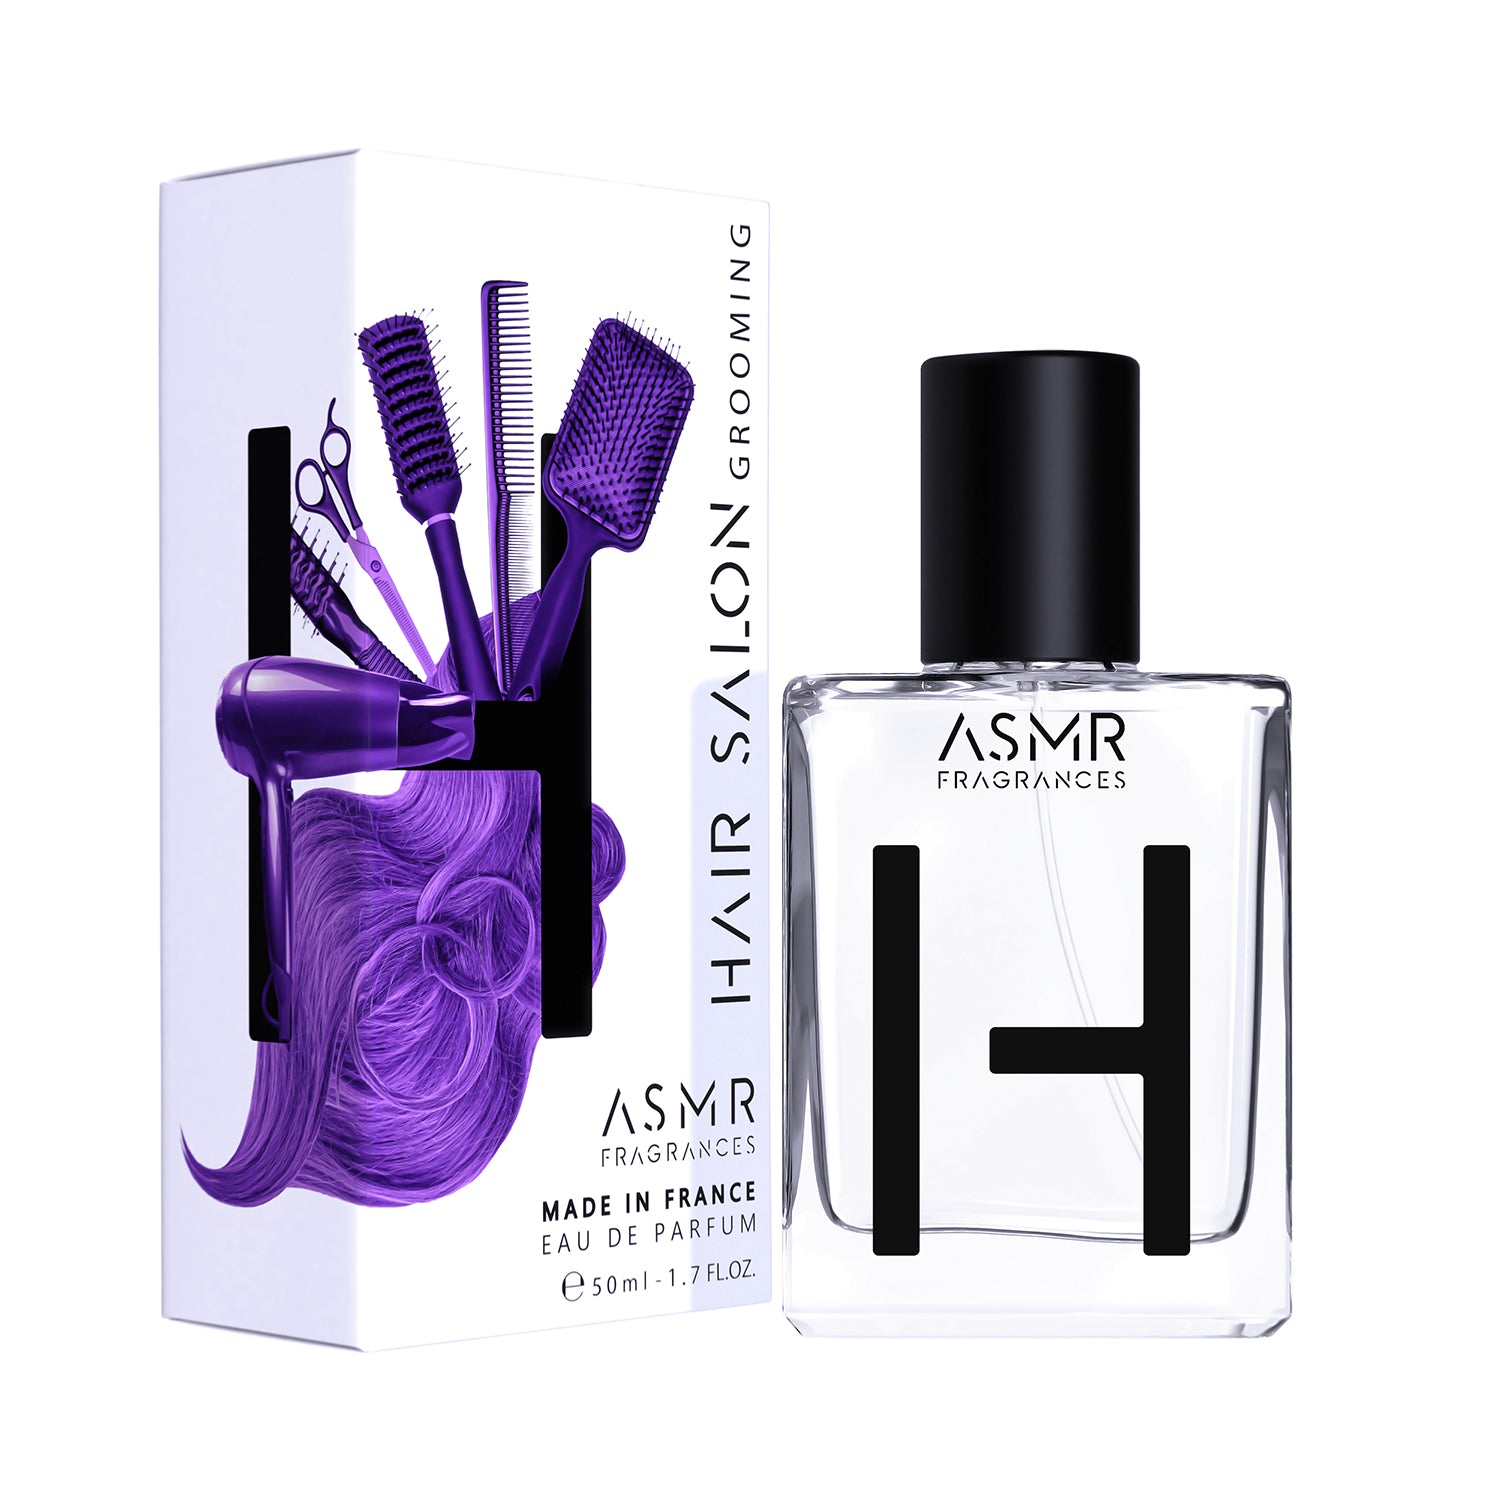 ASMR Fragrances | Hair Salon Grooming Abfüllung-Parfümproben